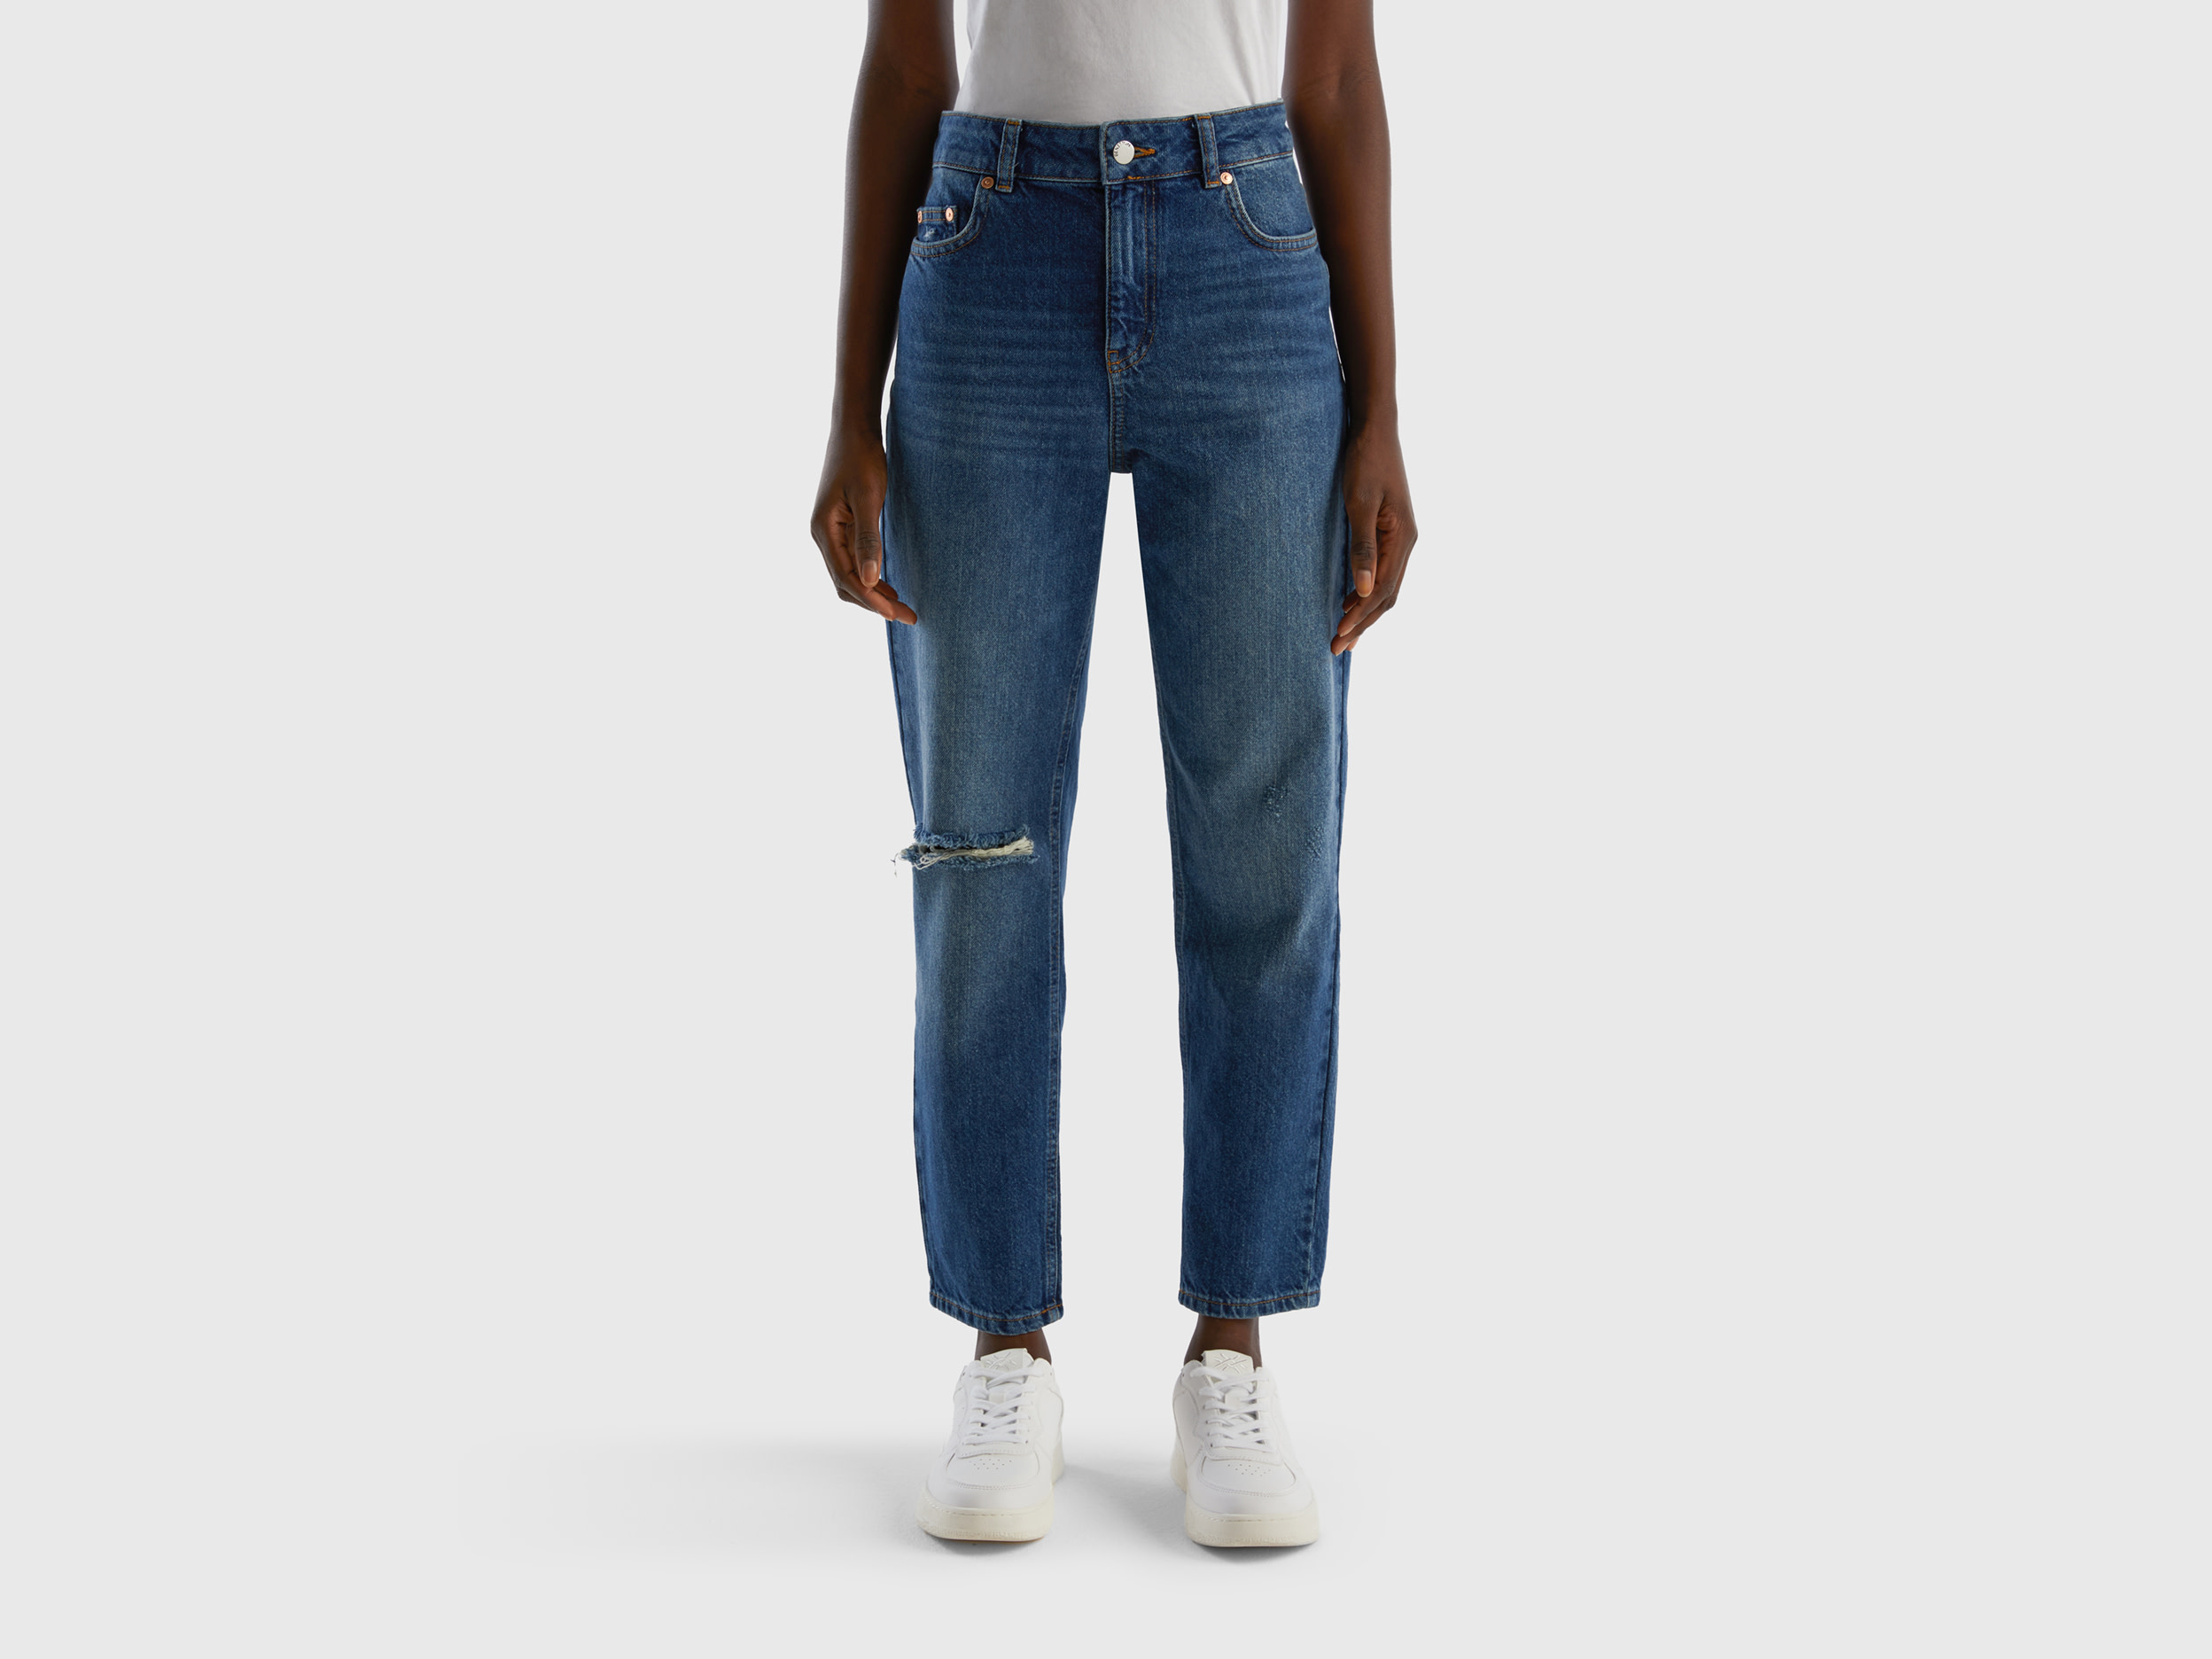 Benetton, Cropped High-waisted Jeans, size 30, Dark Blue, Women